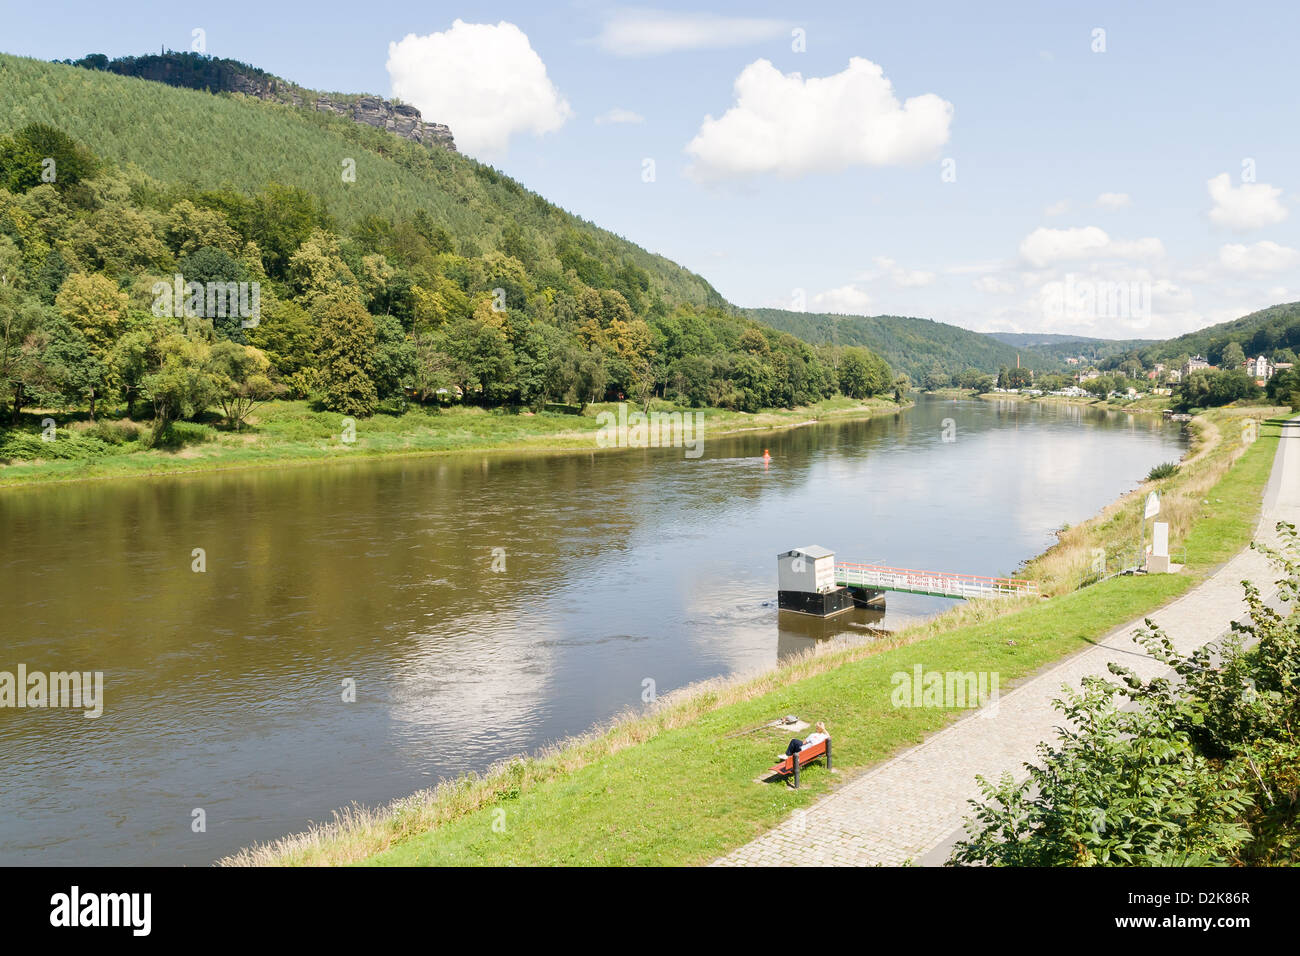 the River Elbe, Germany Stock Photo: 53283967 - Alamy